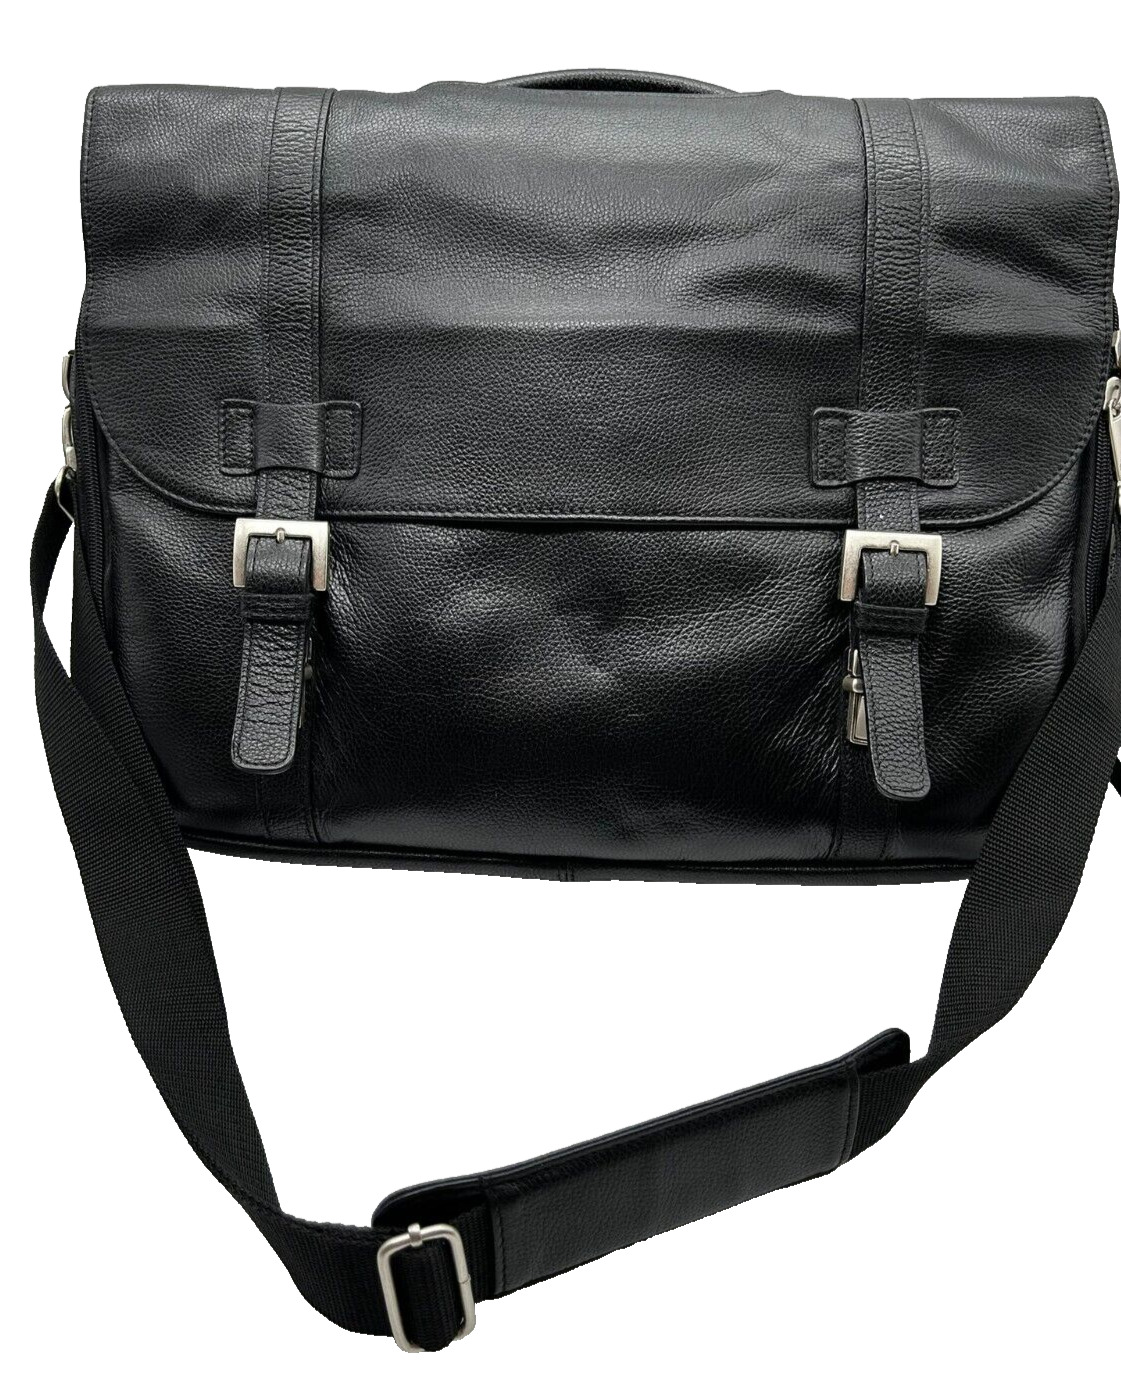 Wilsons Leather Unisex Black Leather Work Messenger Briefcase Laptop Career Bag